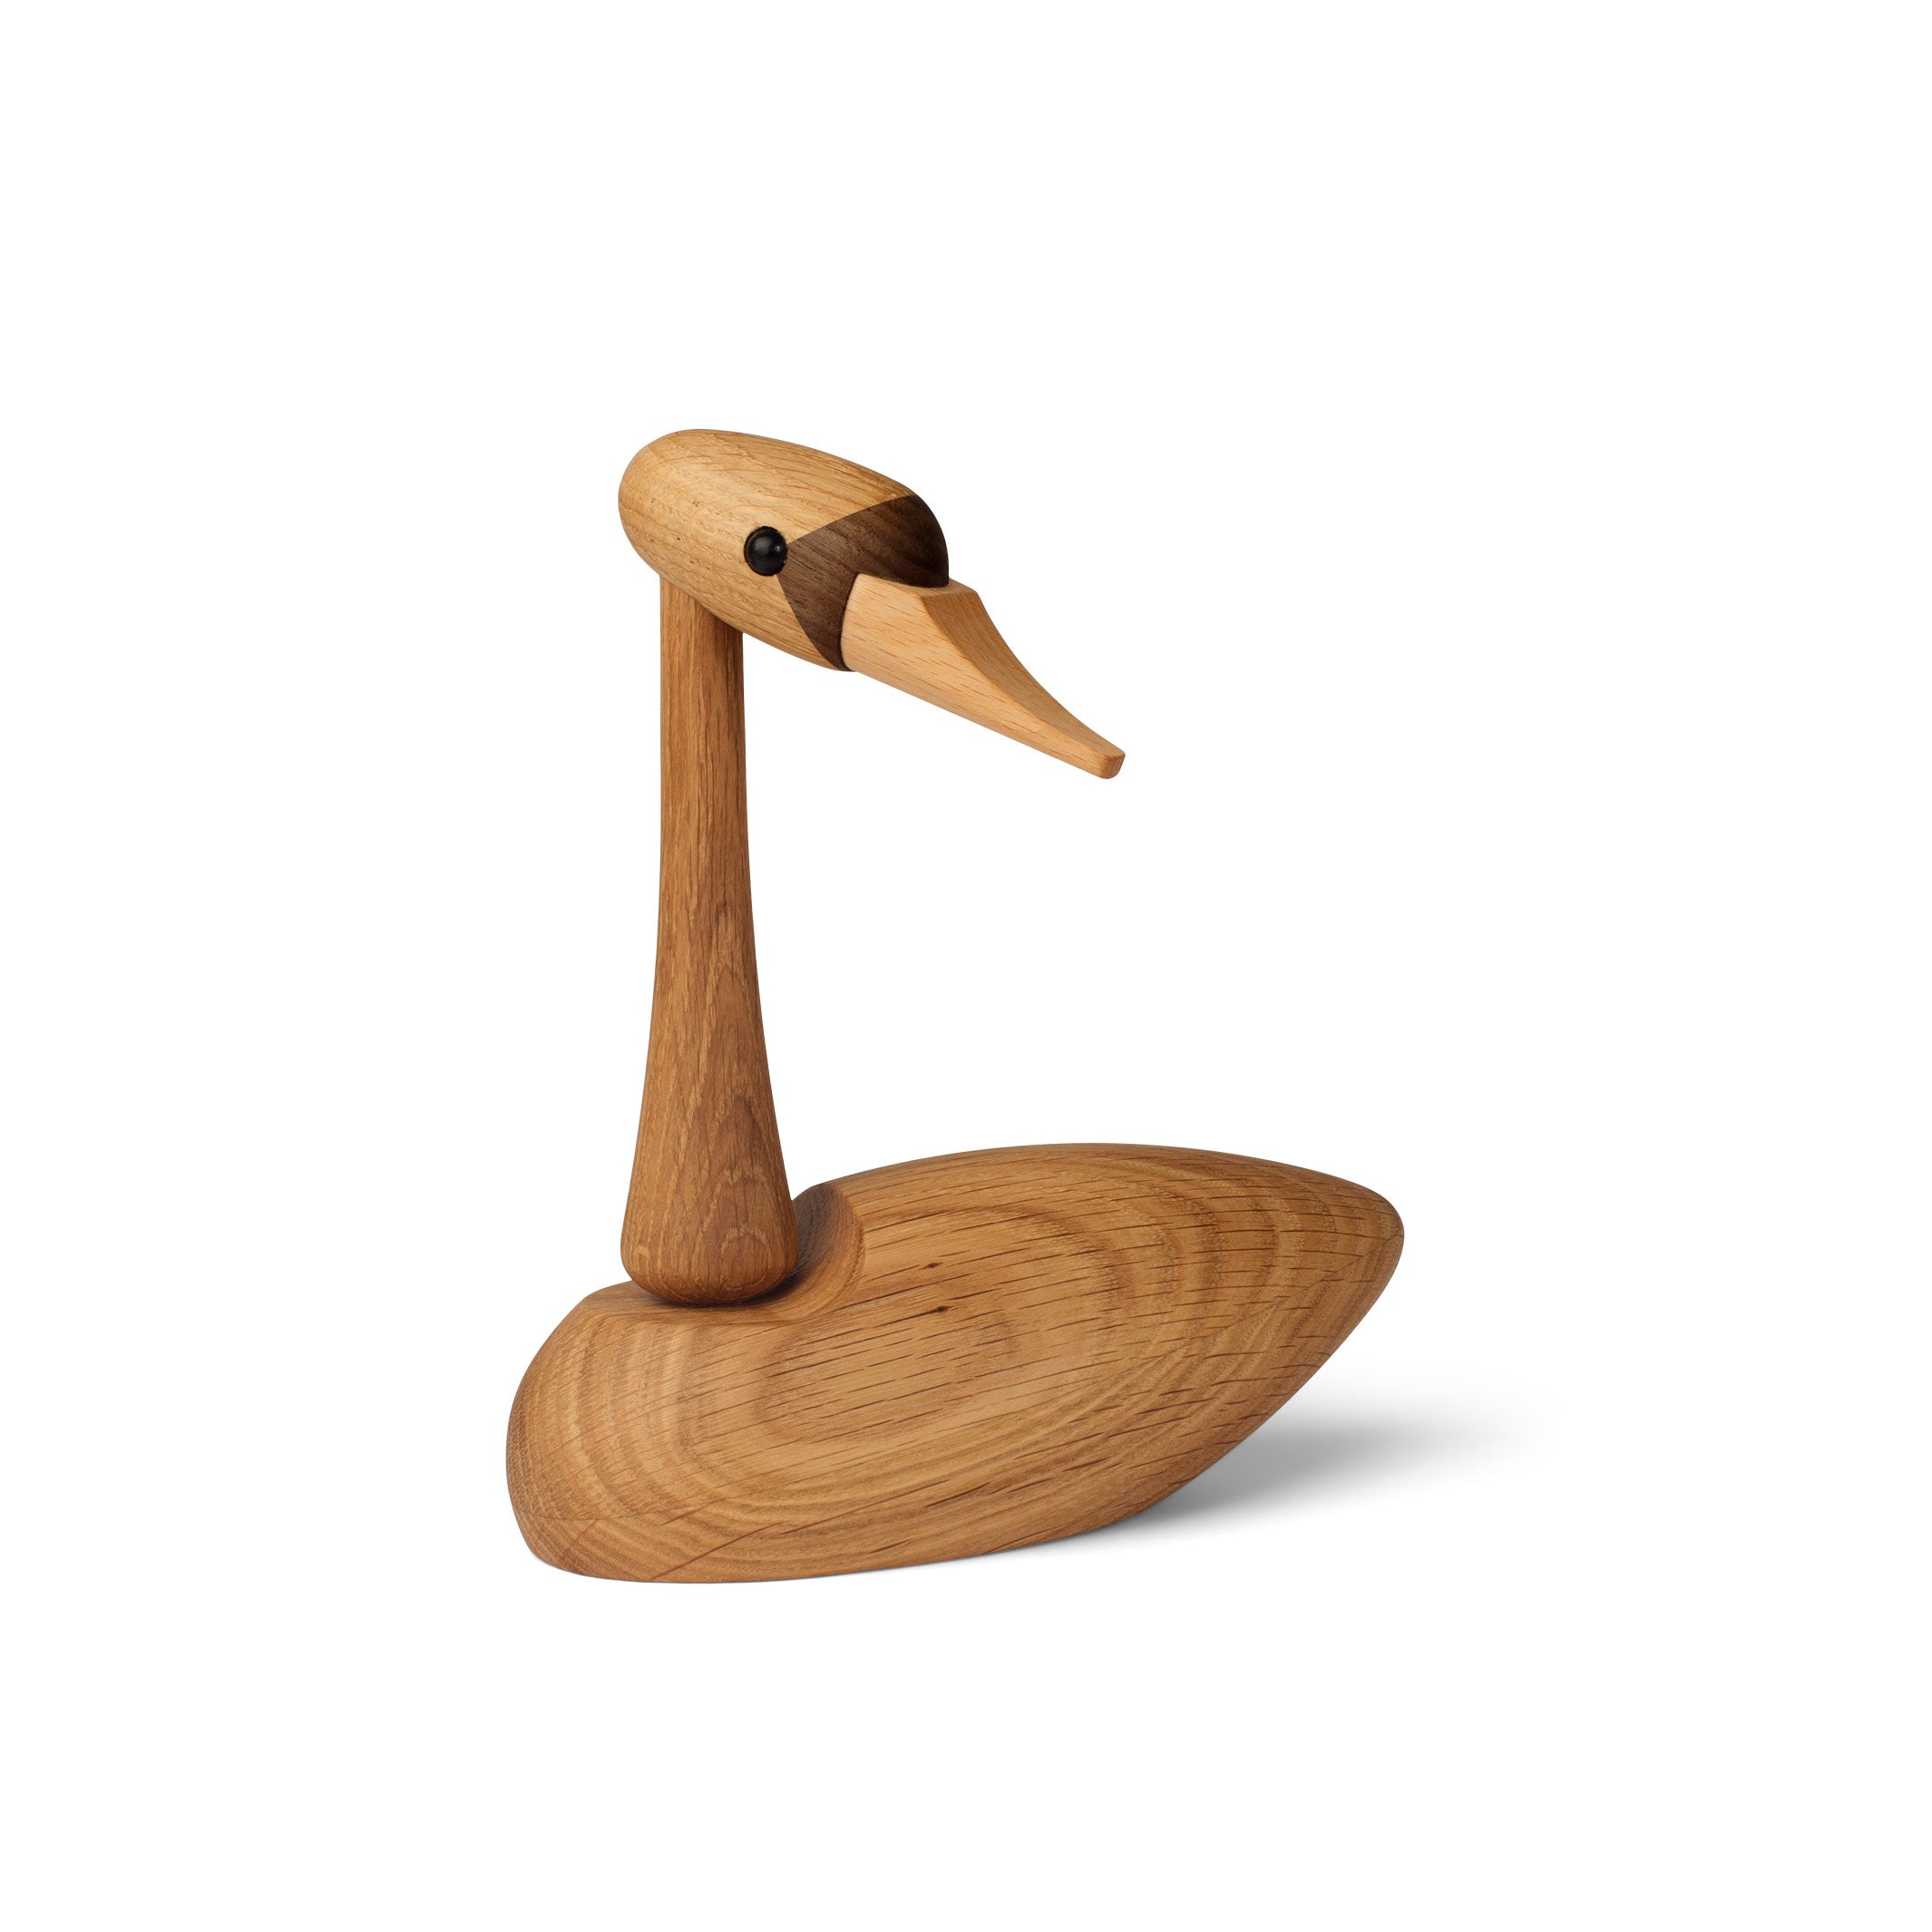 THE SWAN | Big wooden SWANS | Jimmy Kessler | Spring Copenhagen